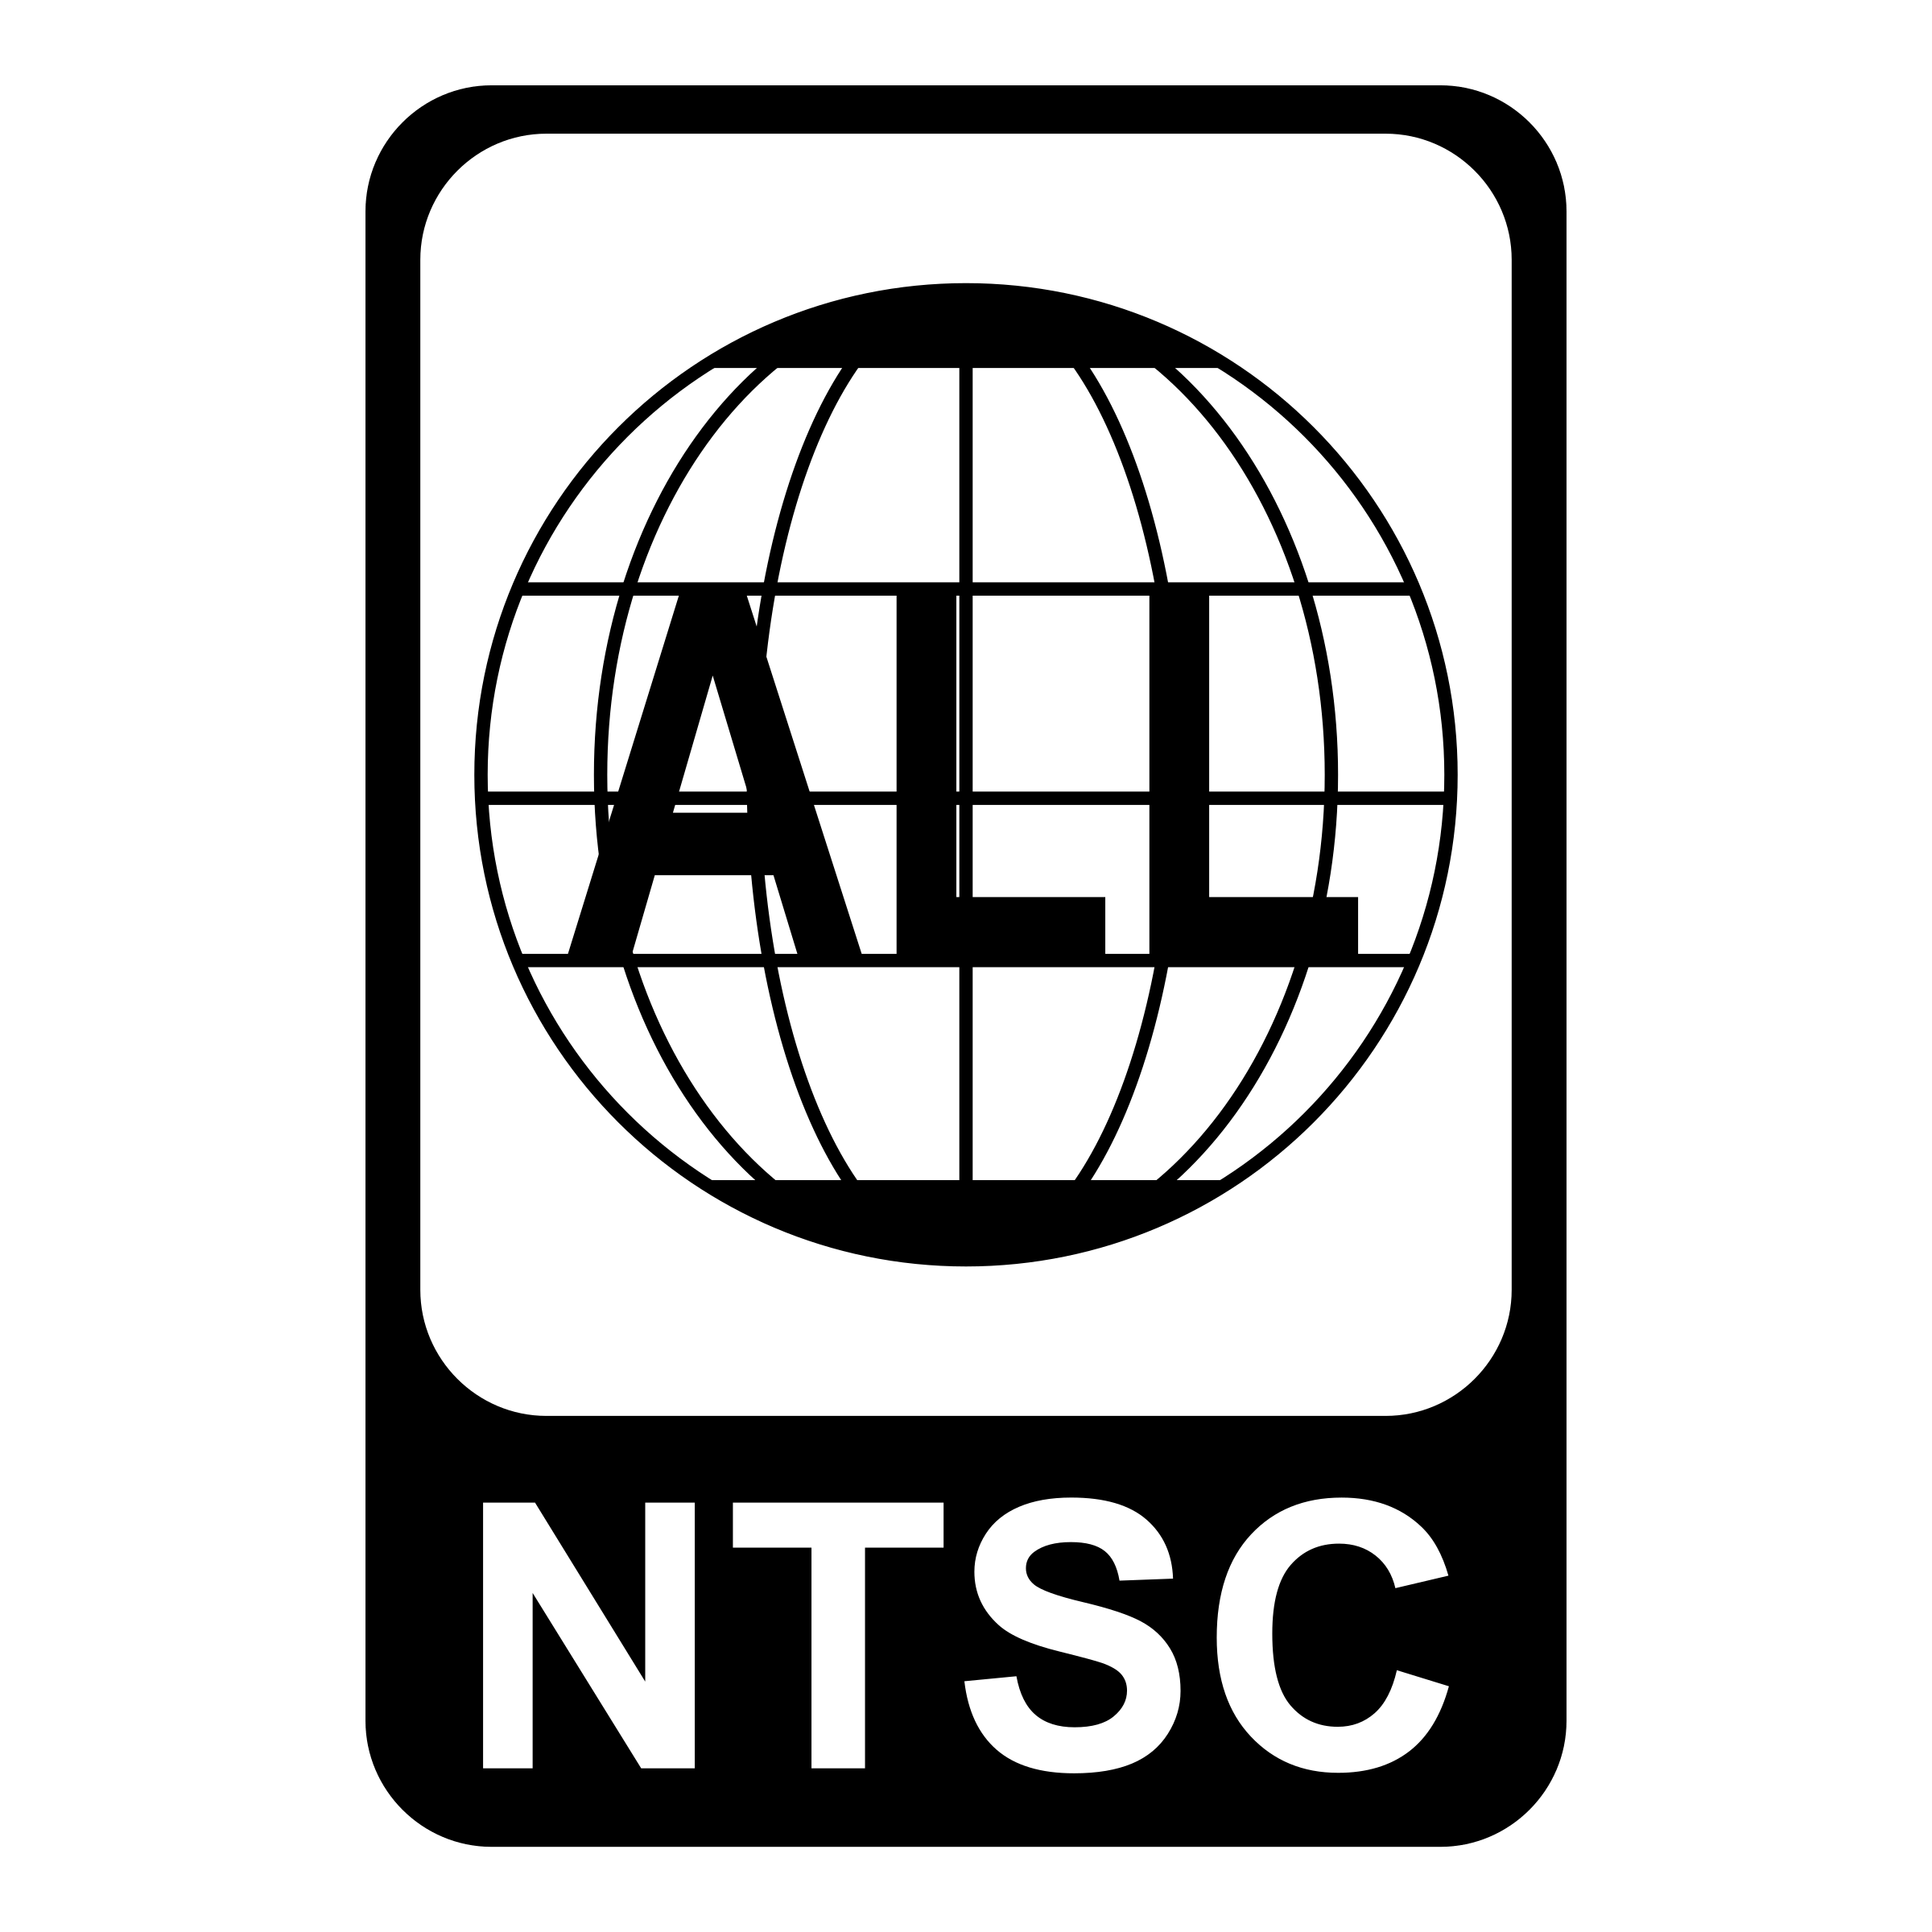 NSTC Logo - All NTSC 01 Logo PNG Transparent & SVG Vector